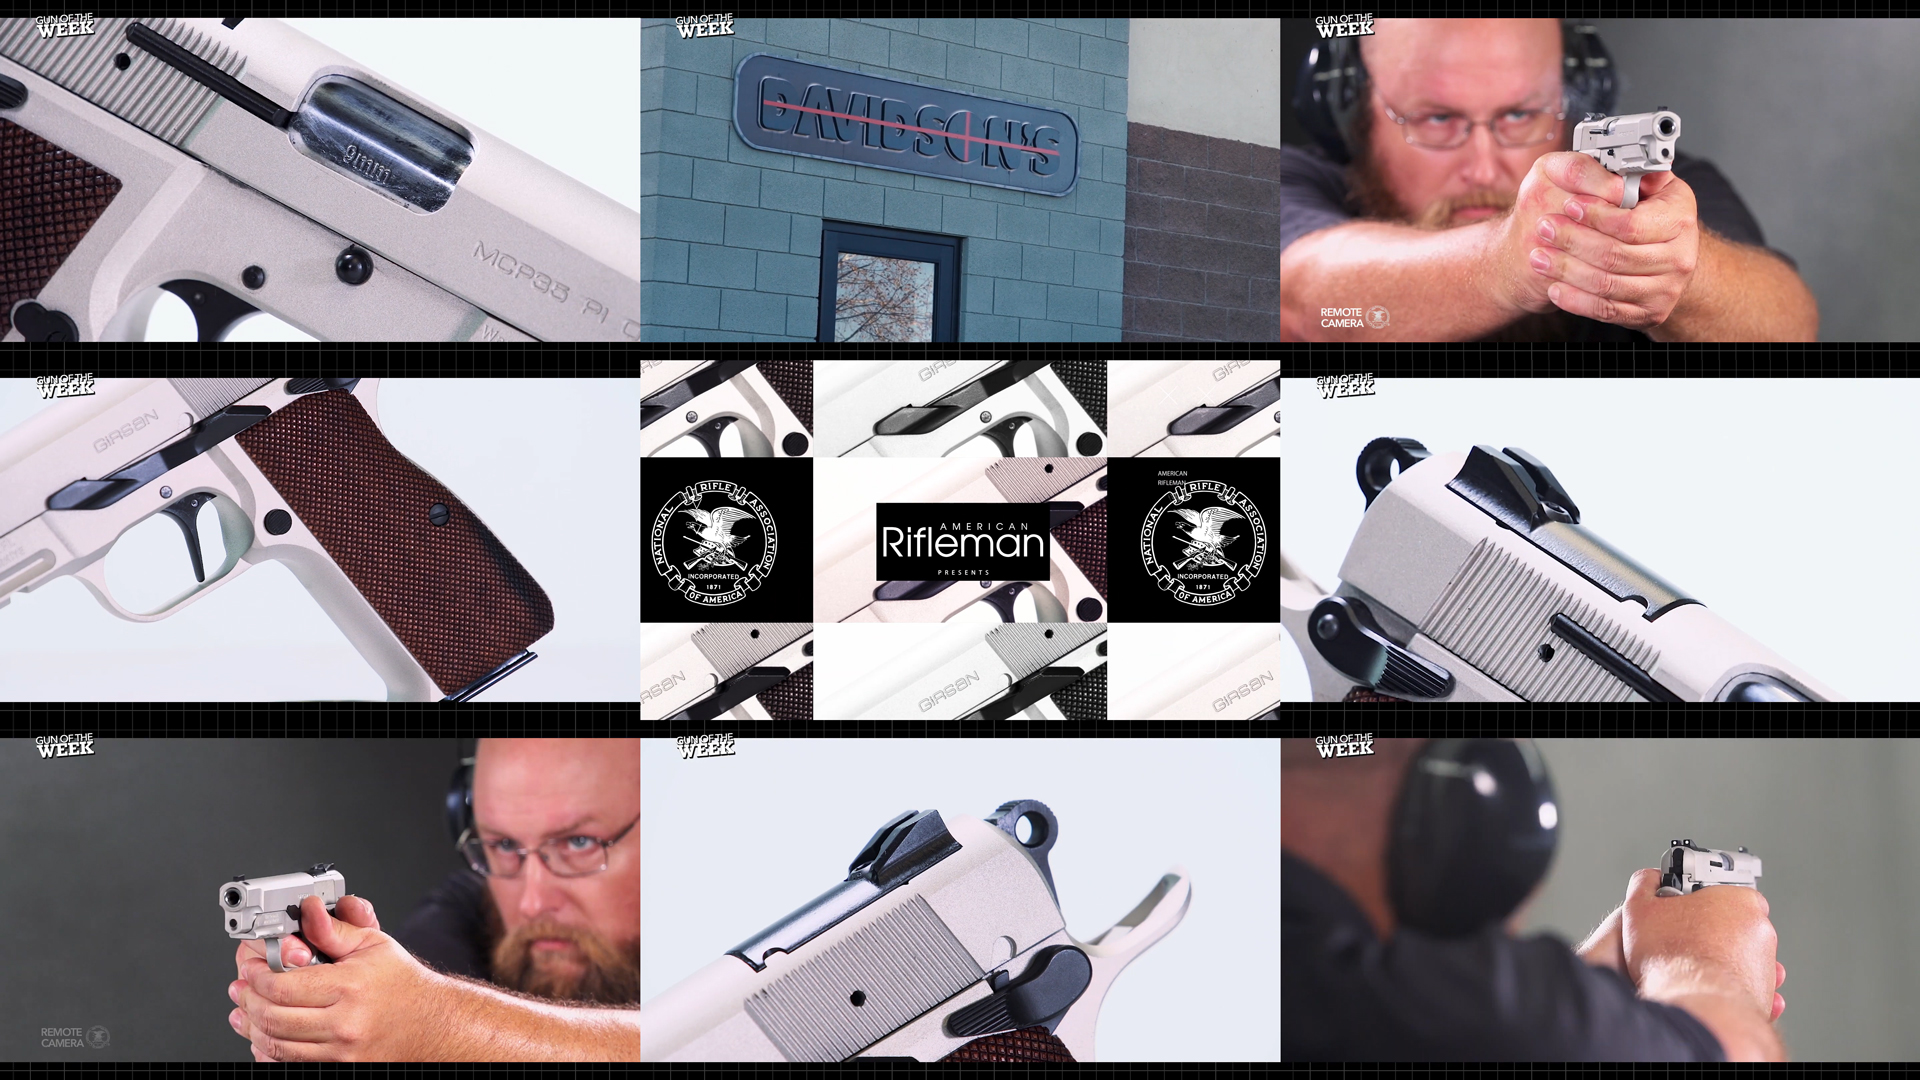 Mosaic tiles 9 images gun details man shooting davidsons pistol mcp35 pi ops exclusive